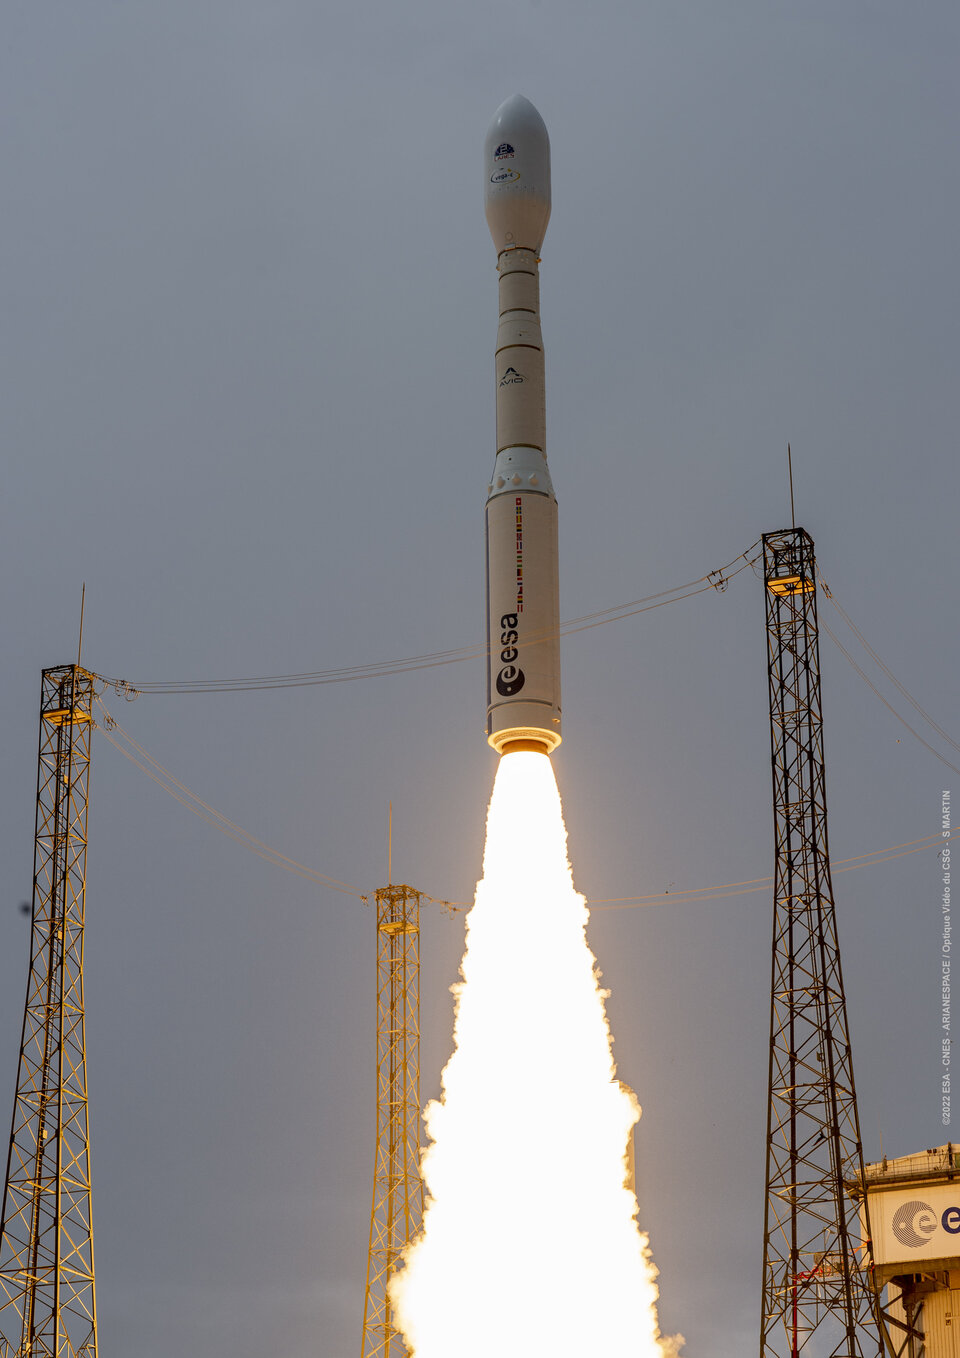 Vega’s inaugurele vlucht in juli 2022